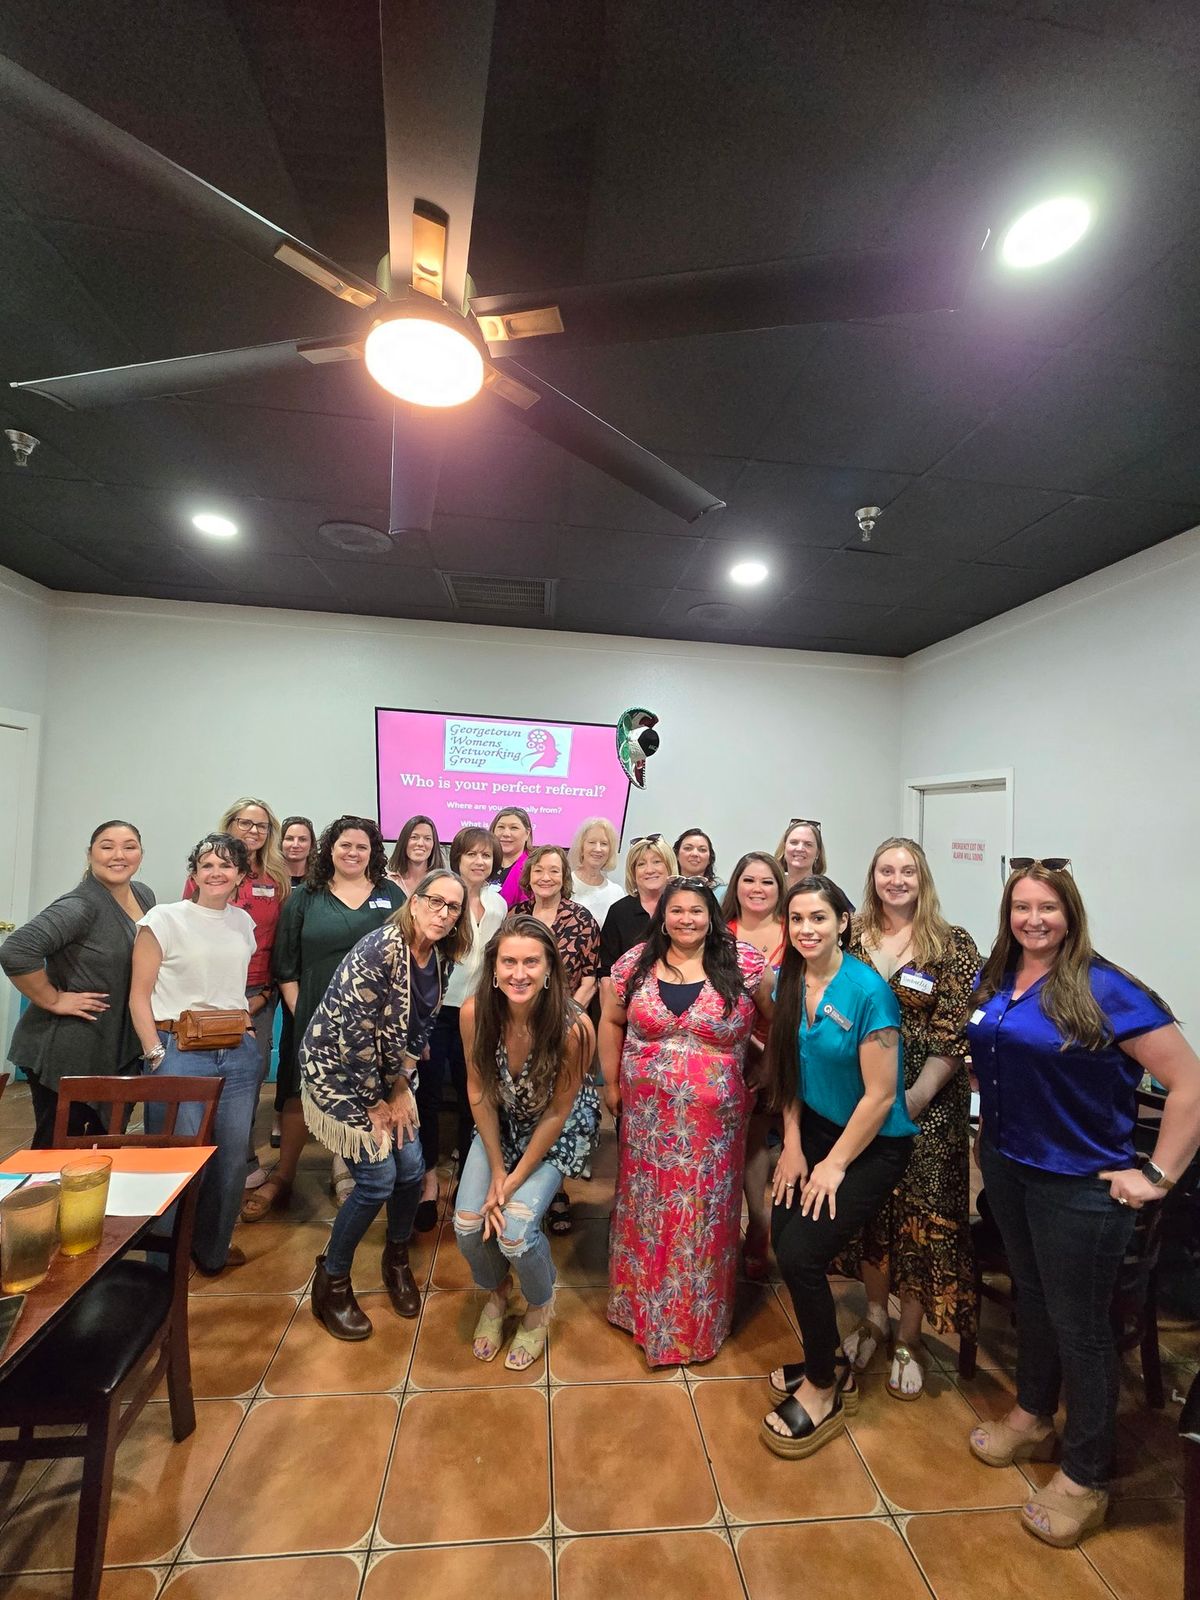 FREE Georgetown Women's Networking Group Meeting